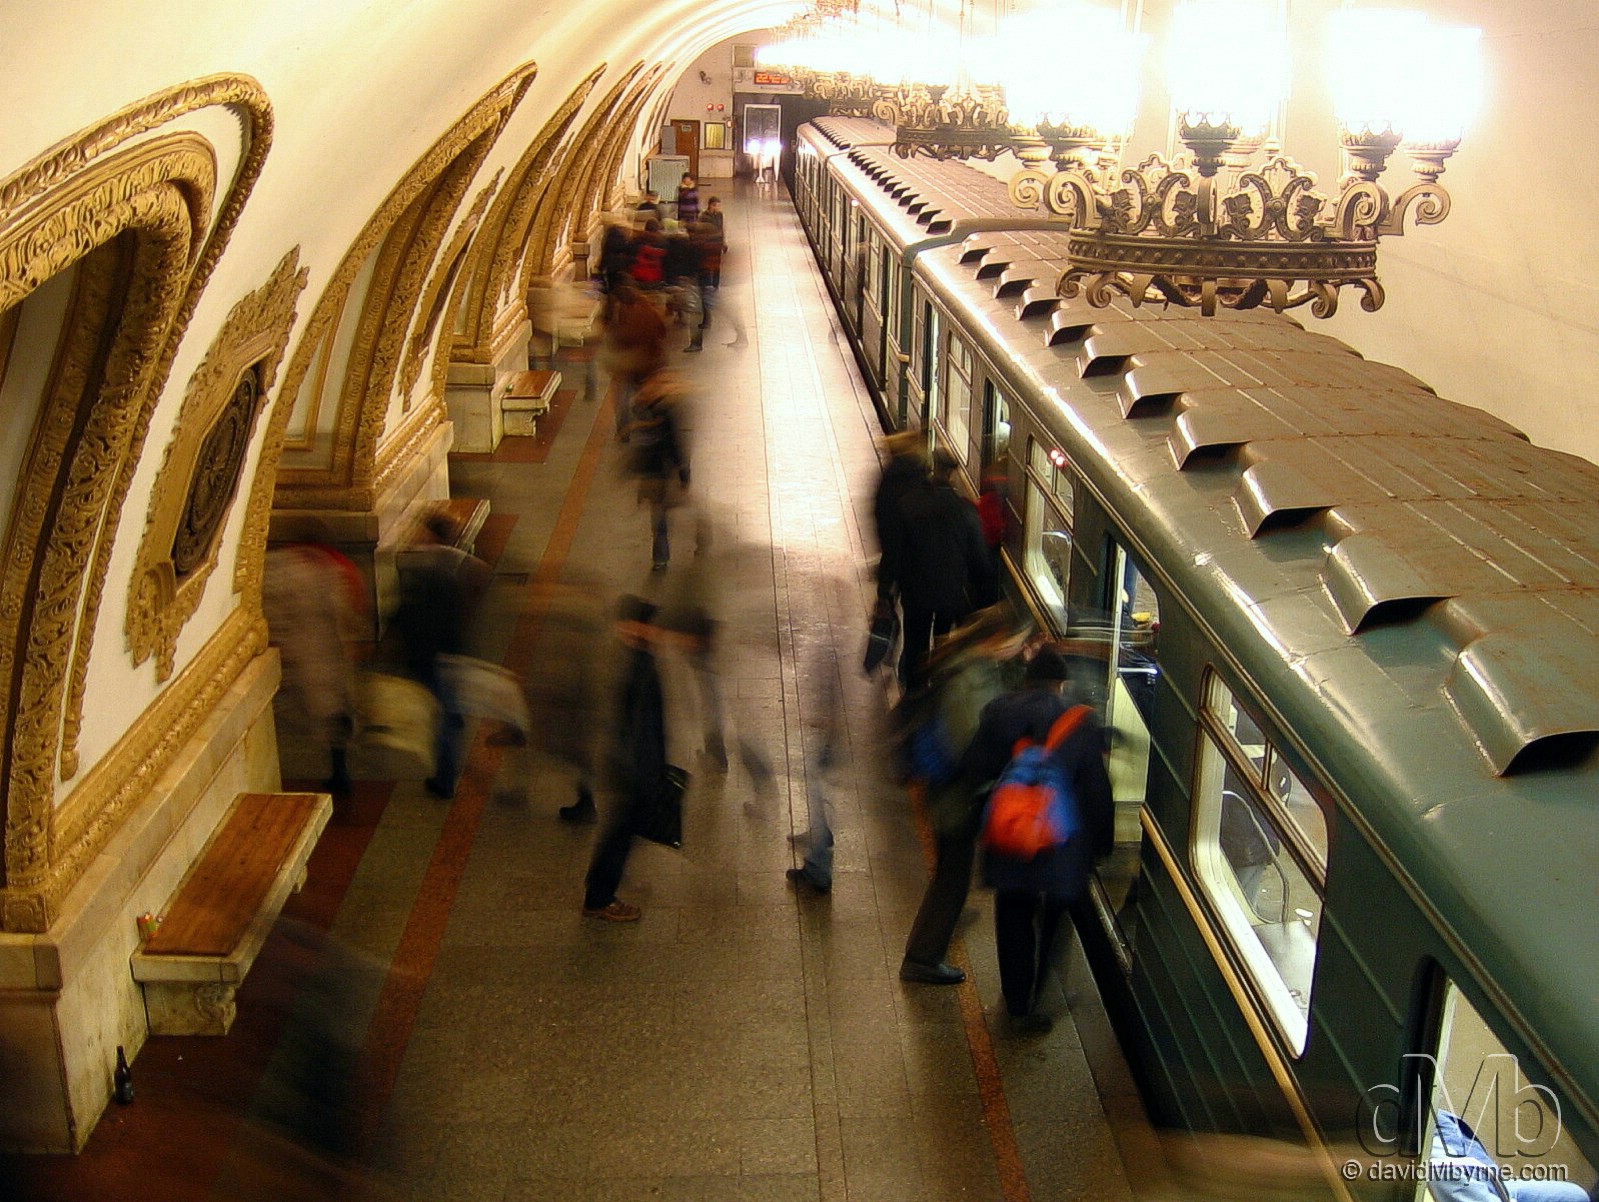 Kievskaya subway station, Moscow, Russia. February 26th, 2006.